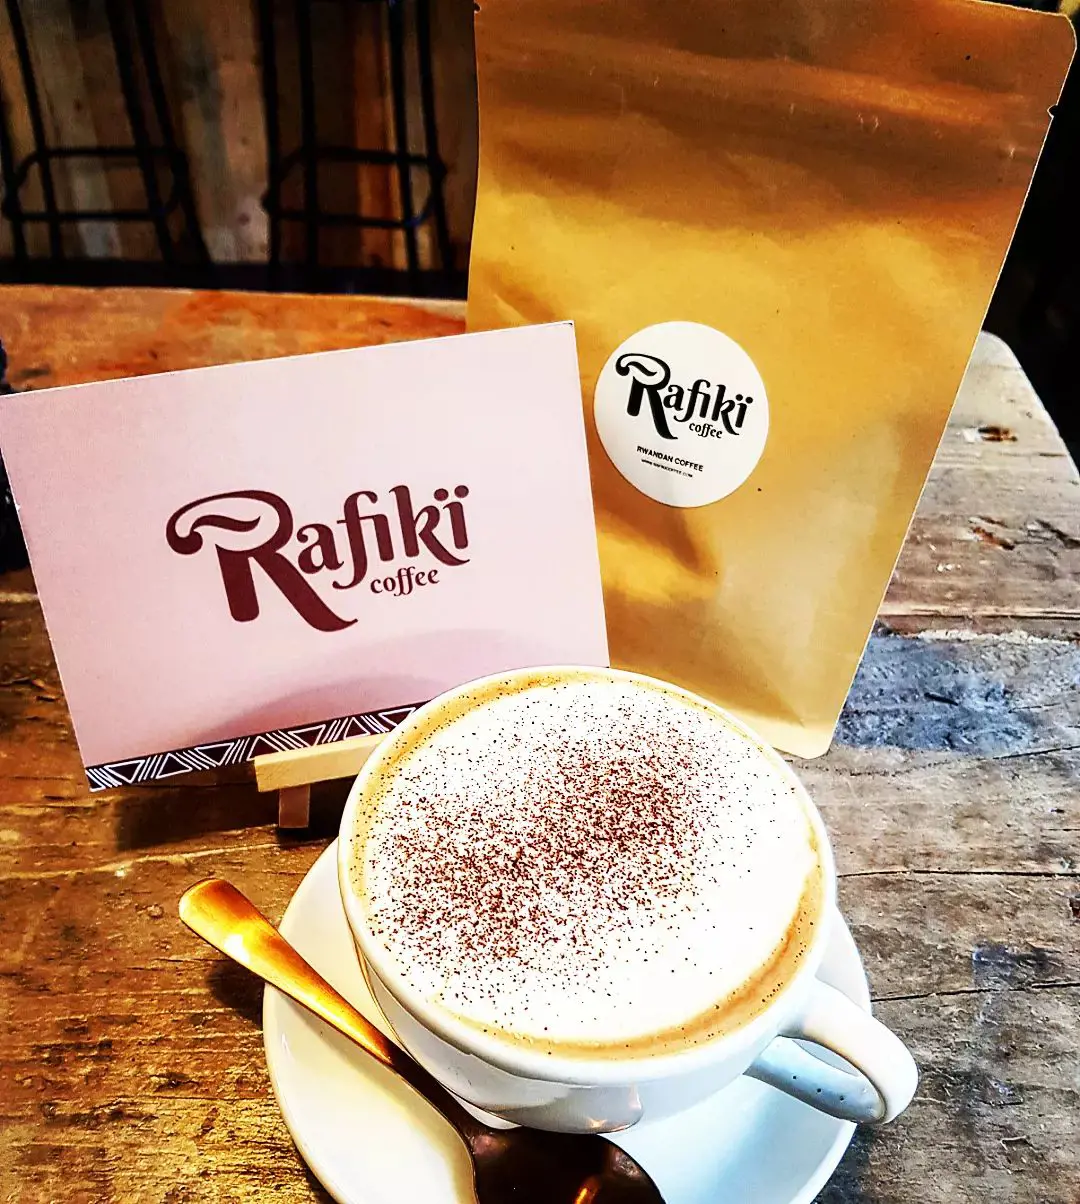 Rafiki 100% Arabica Rwandan coffee